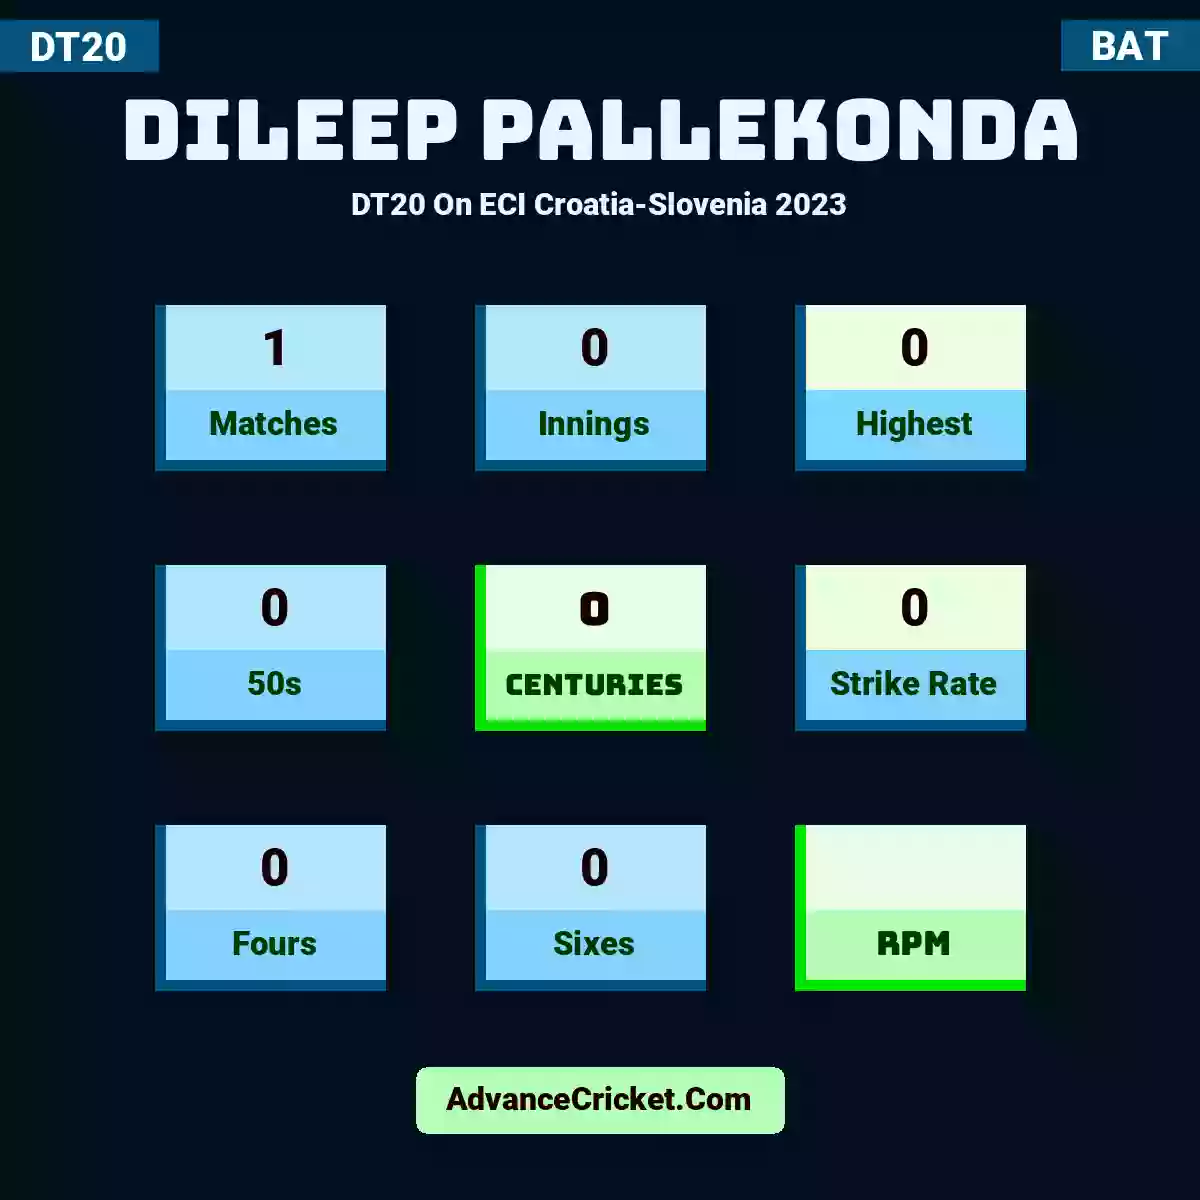 Dileep Pallekonda DT20  On ECI Croatia-Slovenia 2023, Dileep Pallekonda played 1 matches, scored 0 runs as highest, 0 half-centuries, and 0 centuries, with a strike rate of 0. D.Pallekonda hit 0 fours and 0 sixes.